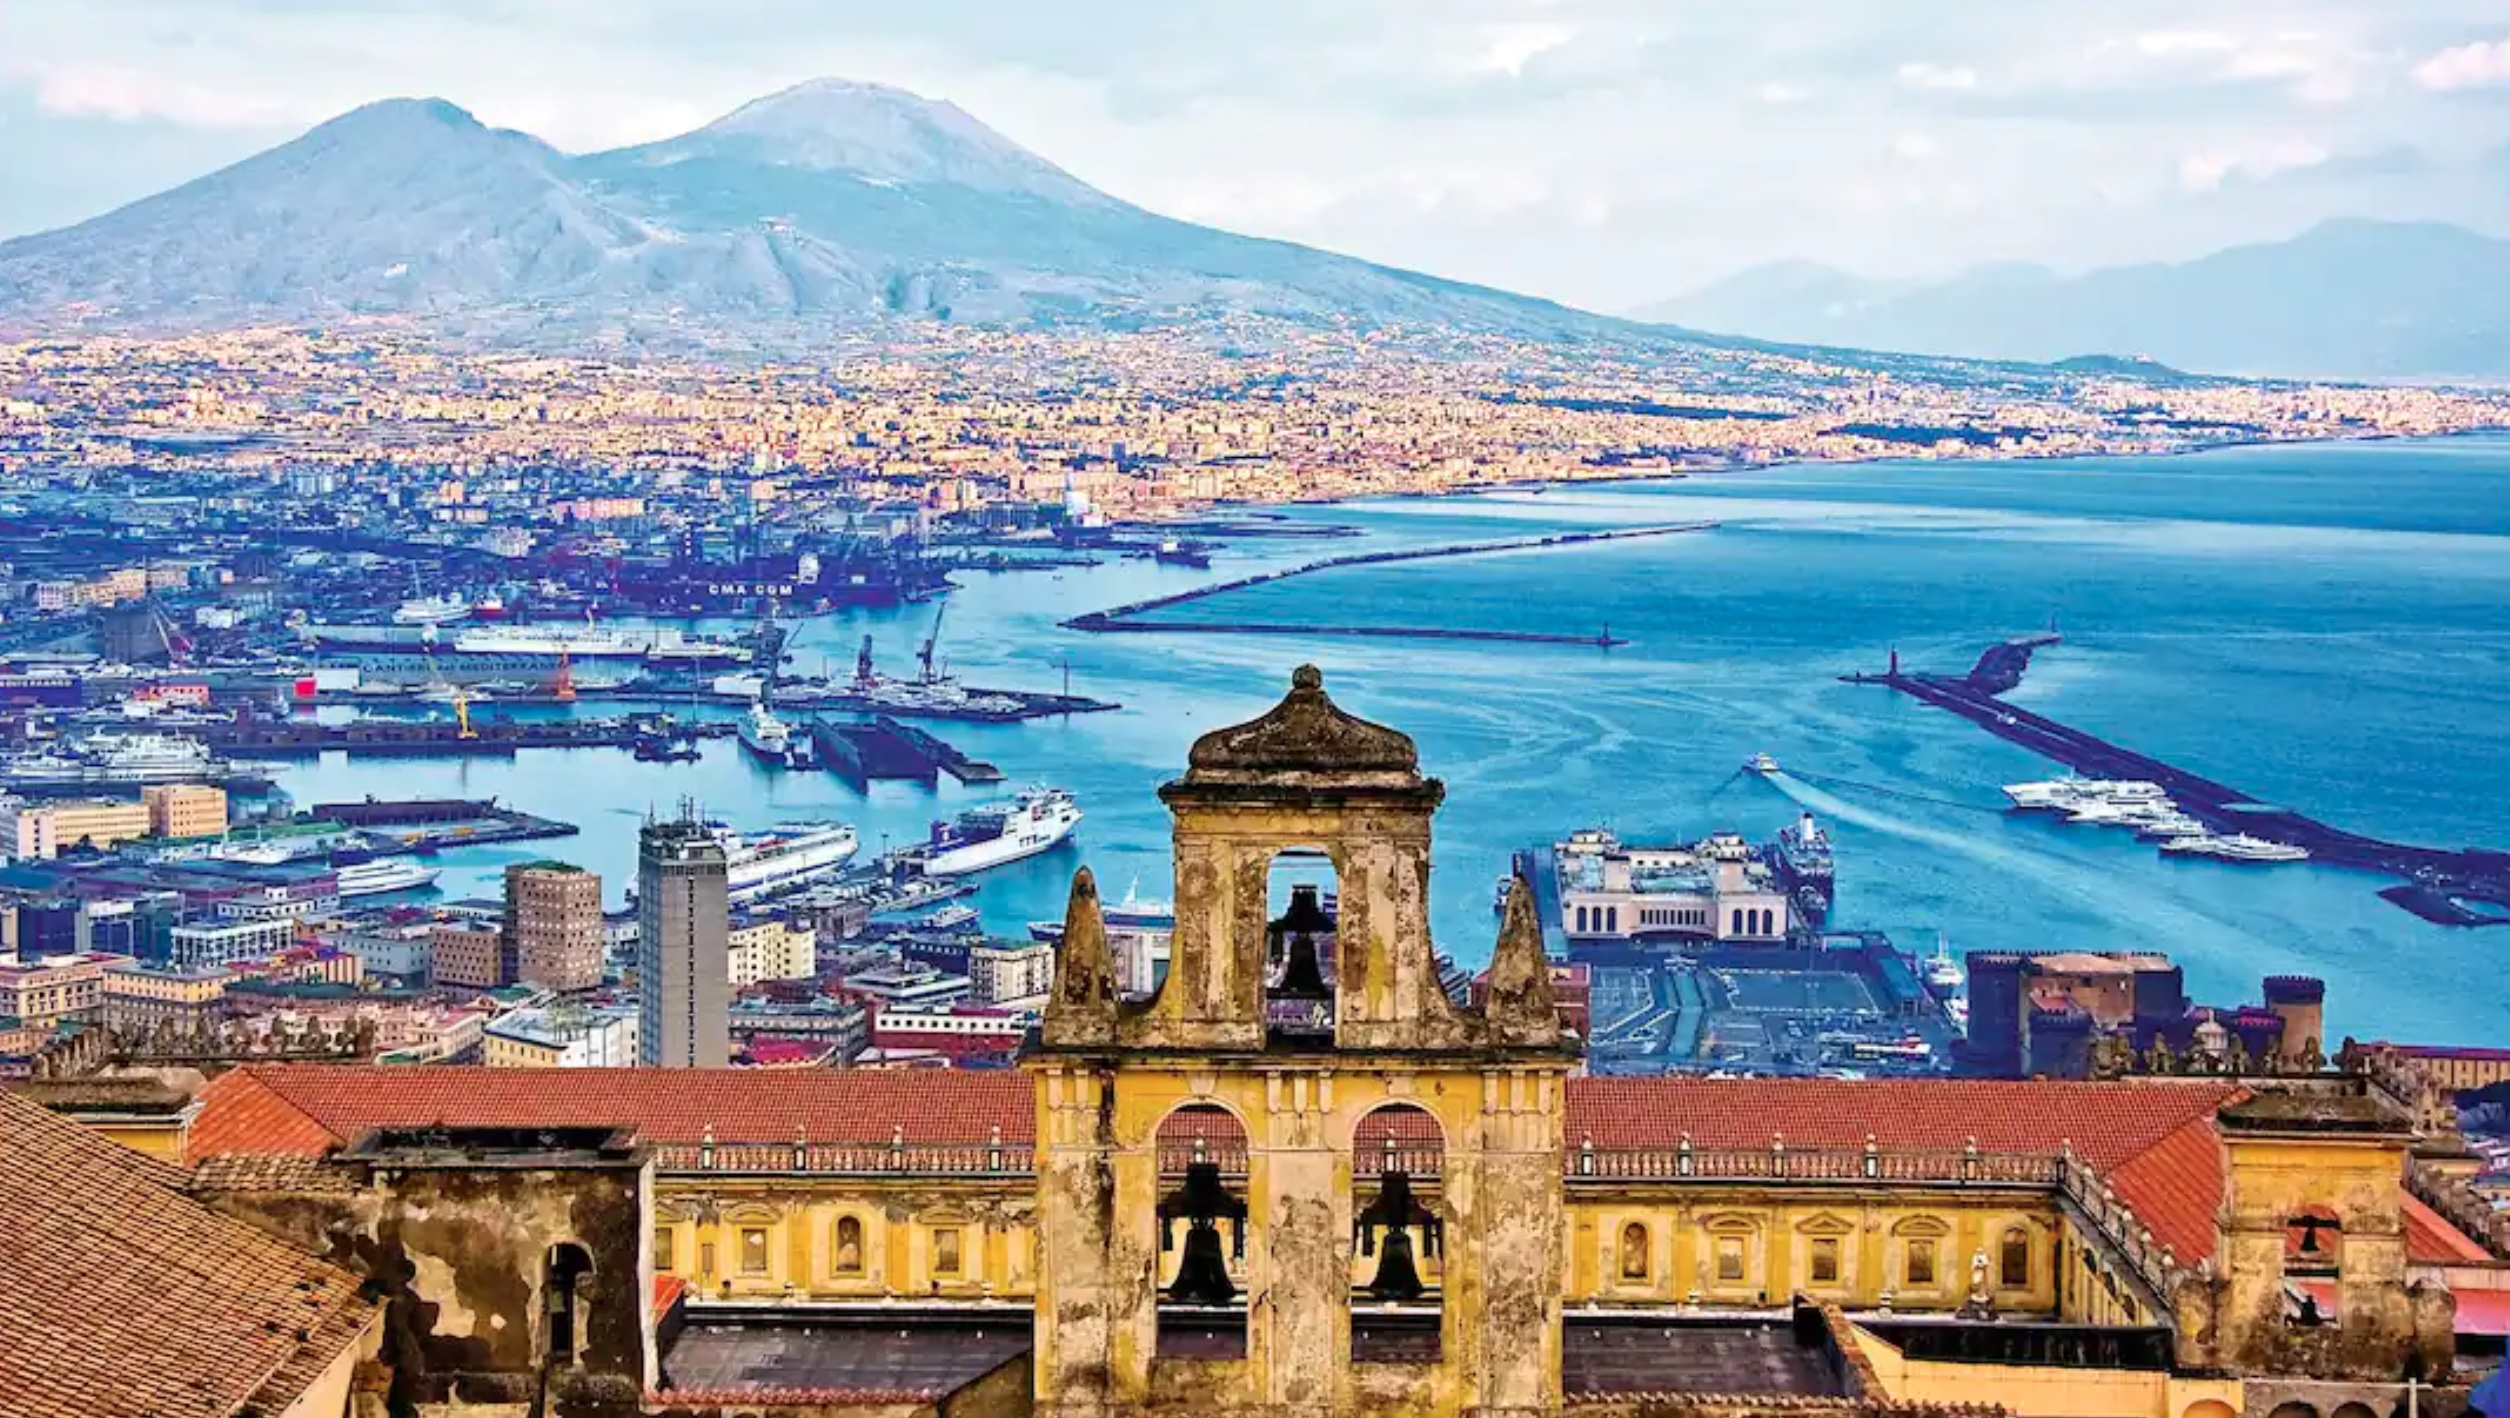 View of Mount Vesuvius across the Bay of Naples